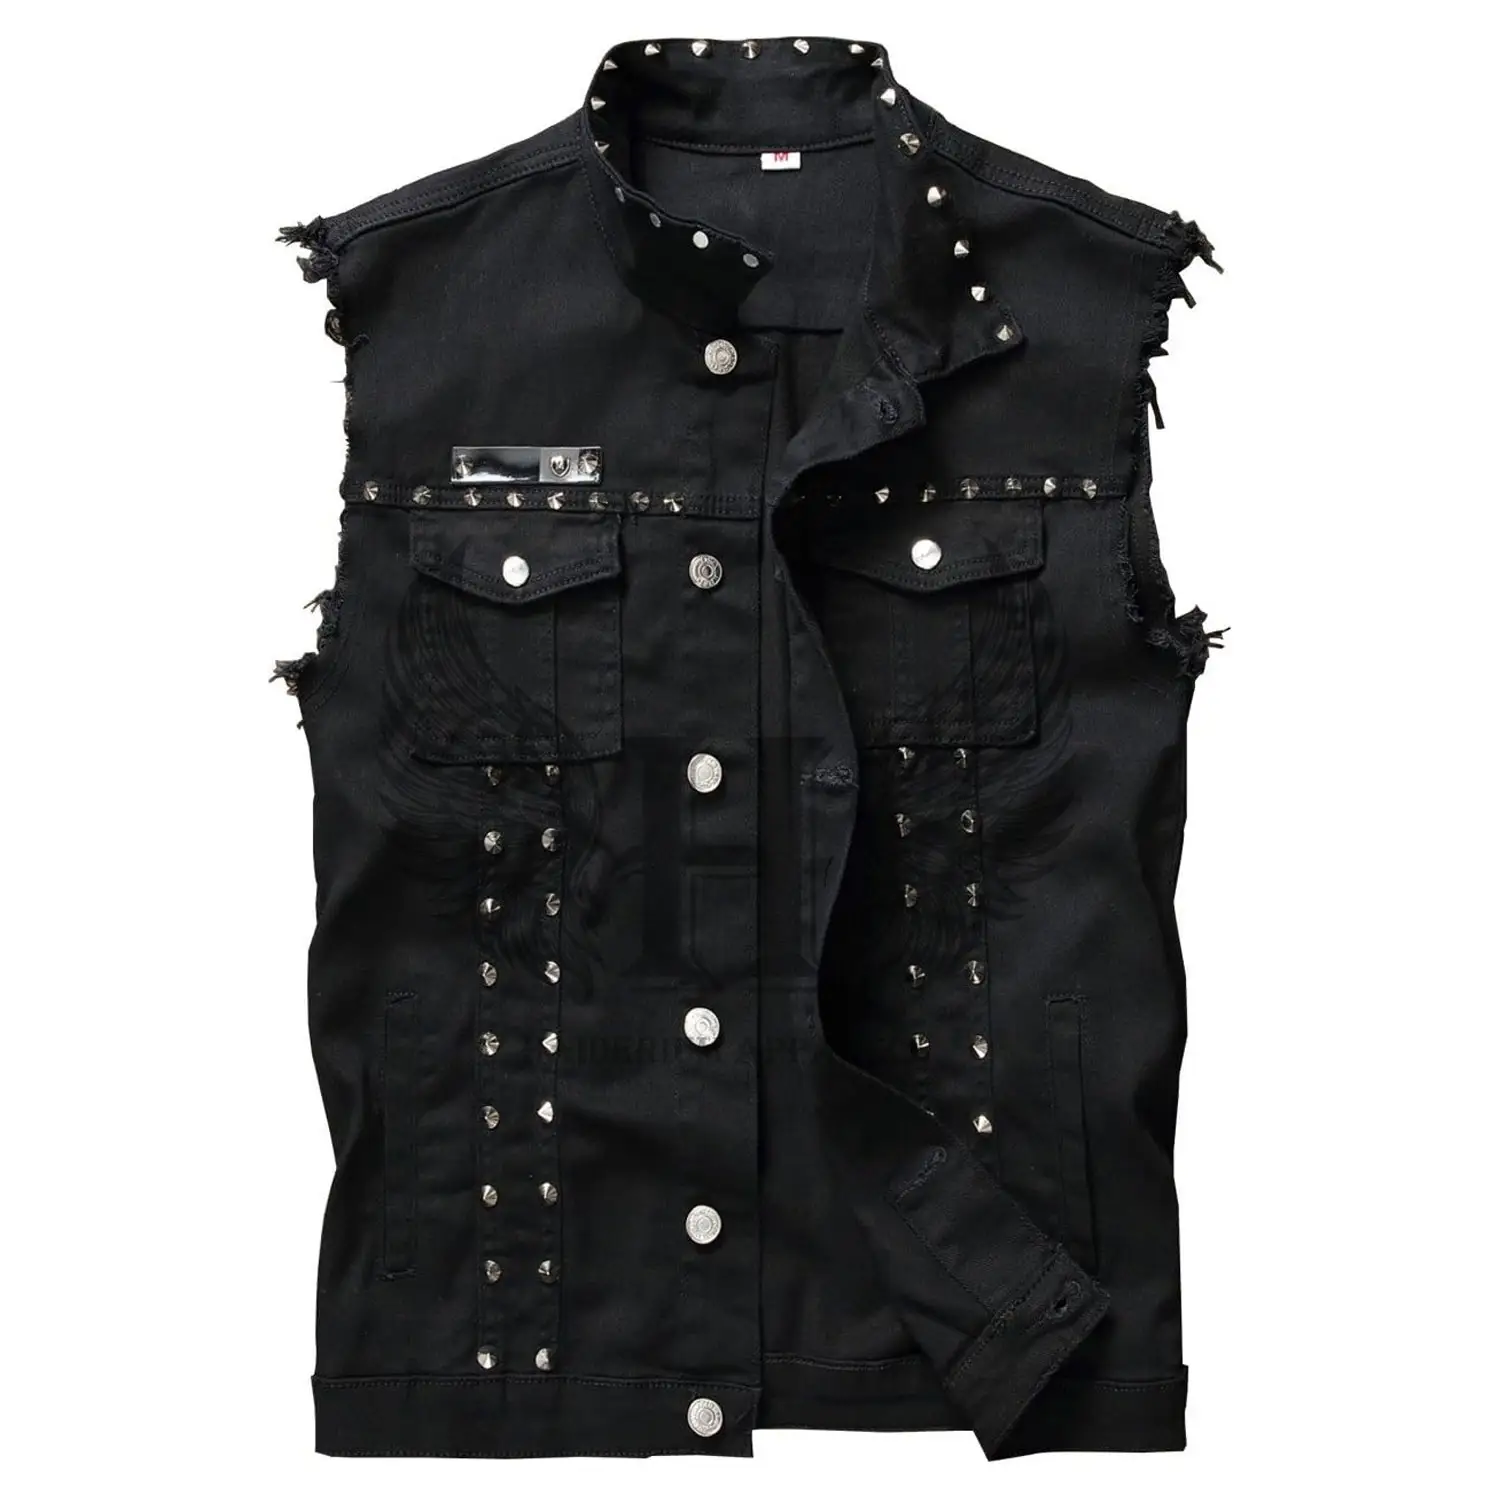 Men's Punk Denim Vest Sleeveless Jean Jackets with Rivets - Stylish Biker Motorcycle Waistcoat for Urban Fashion Statement